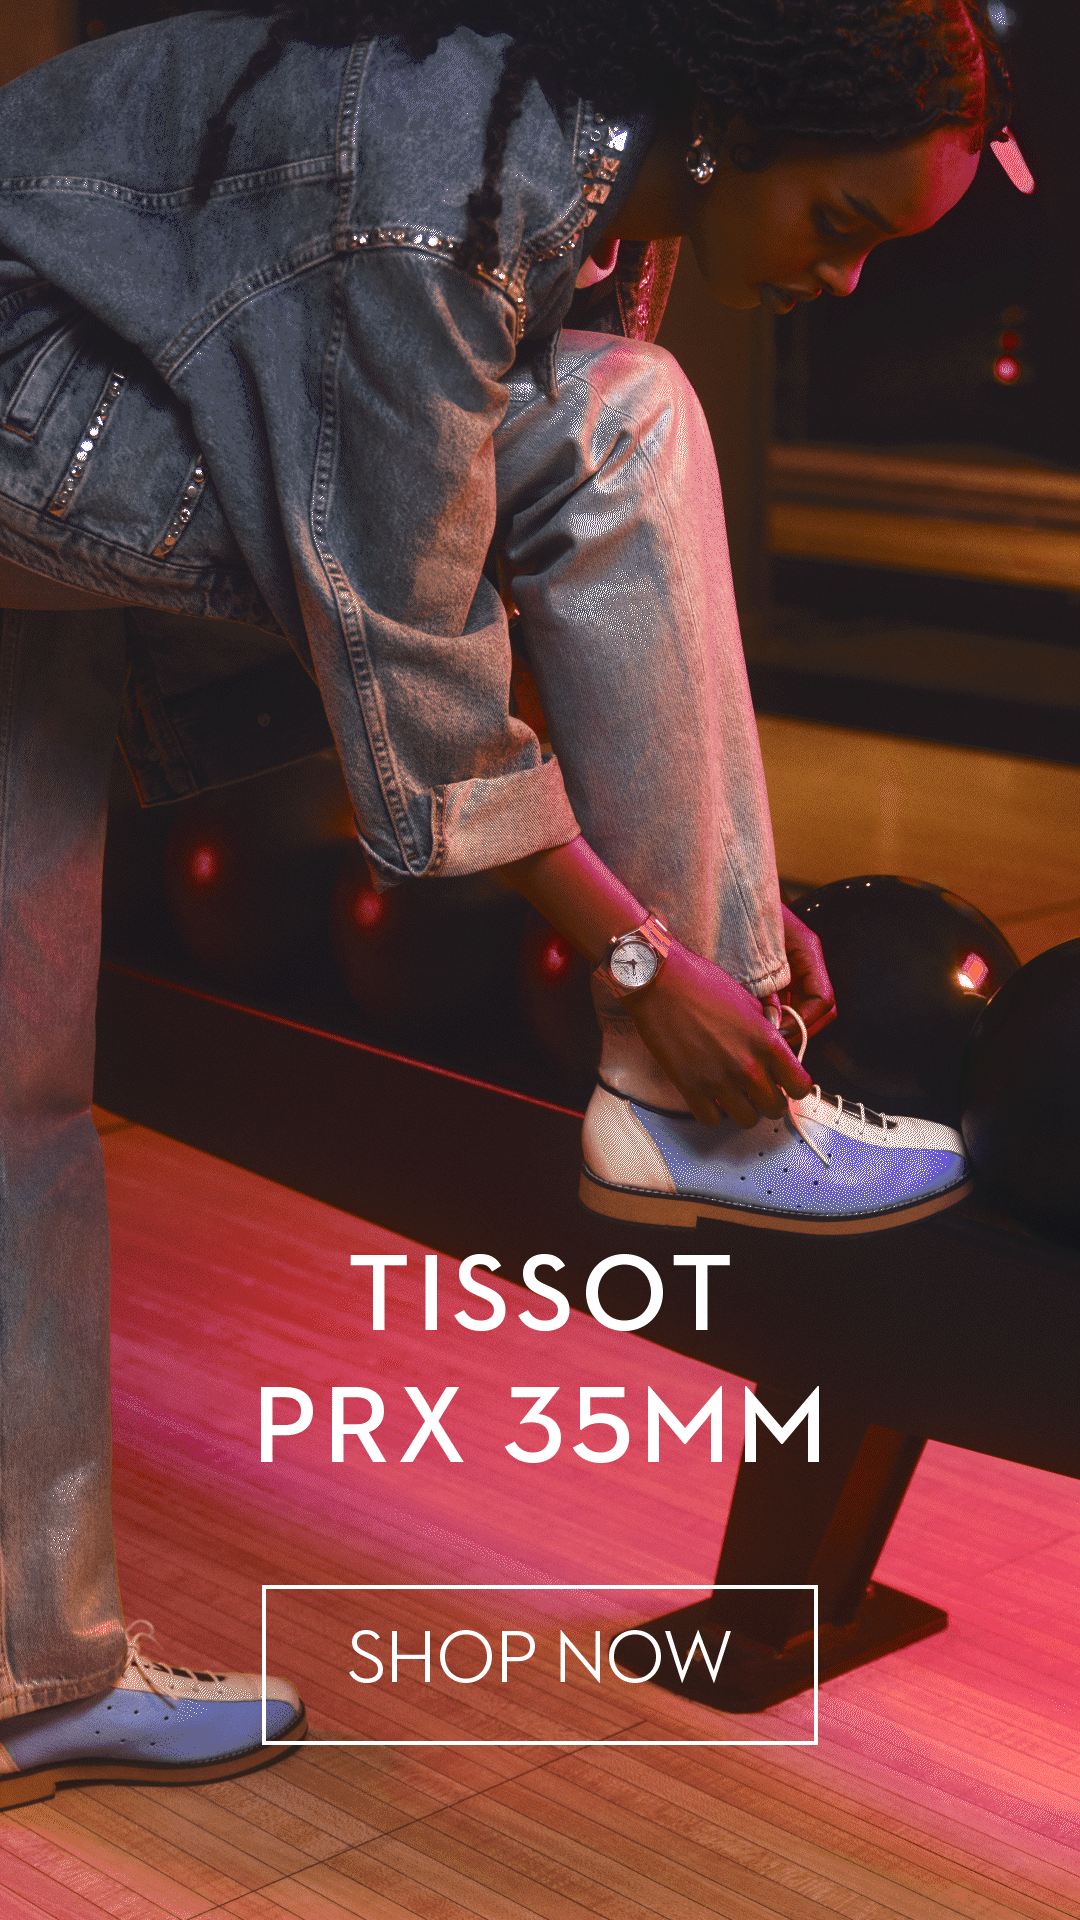 Tissot PRX 35MM Watches | Shop Now